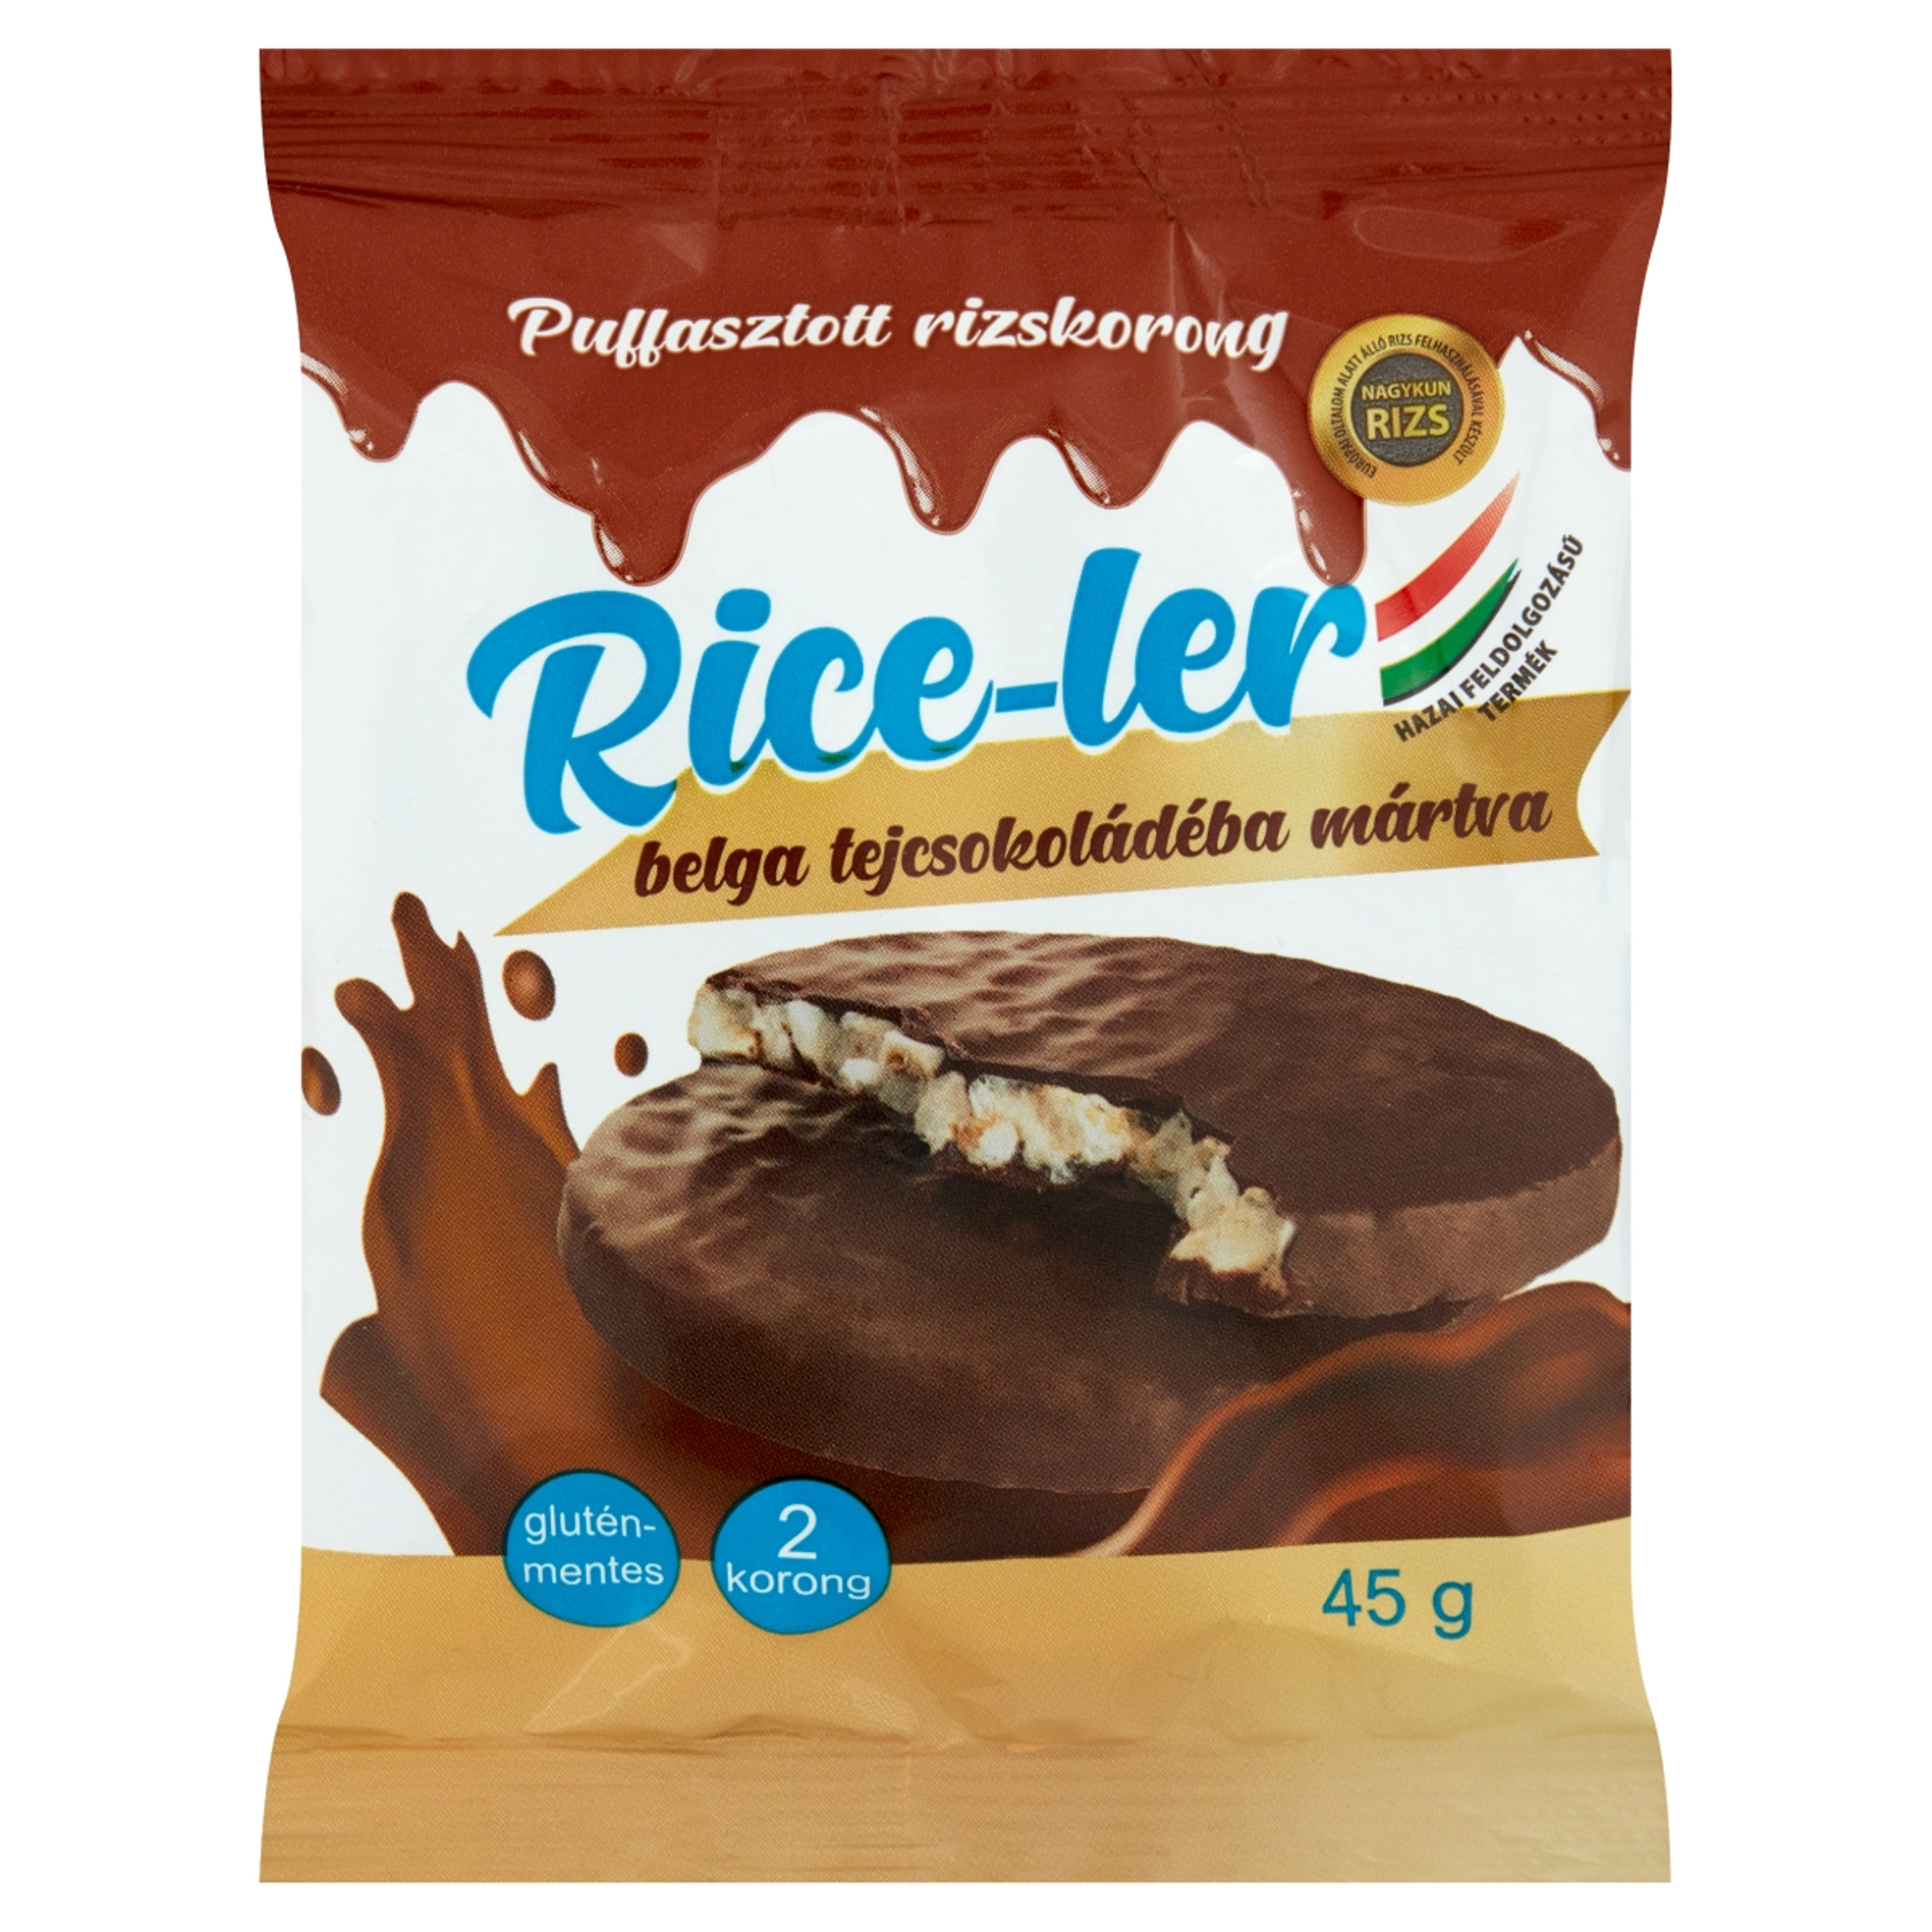 Rice-ler puffasztott rizskorong tejcsokival - 45 g